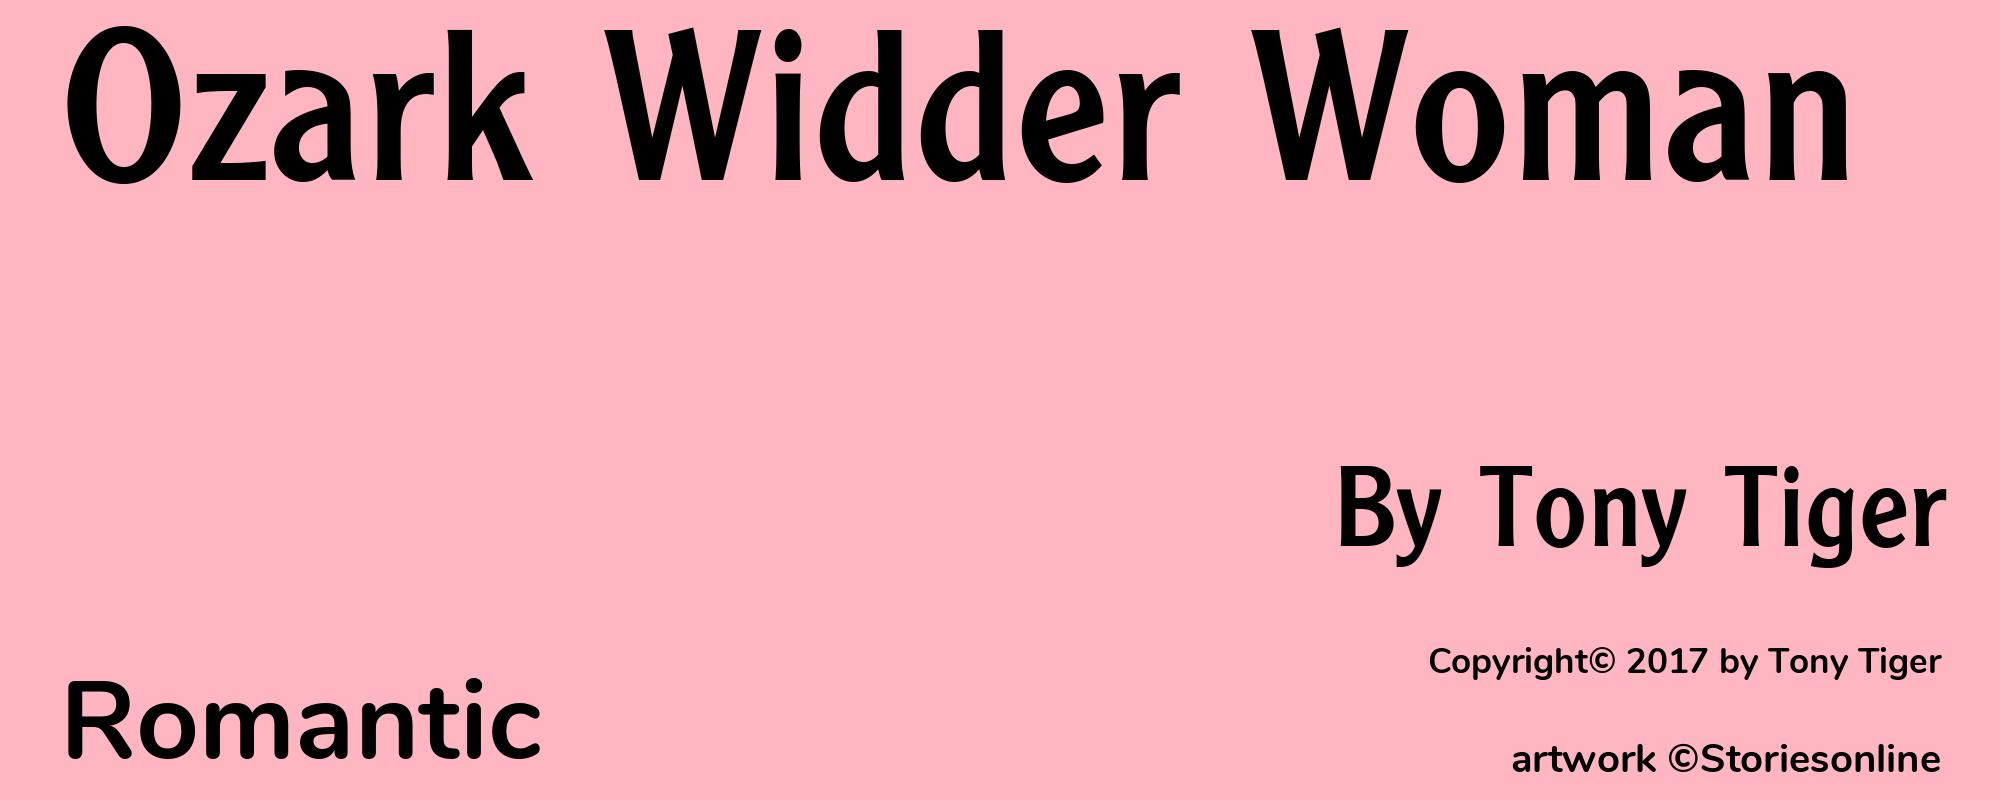 Ozark Widder Woman - Cover